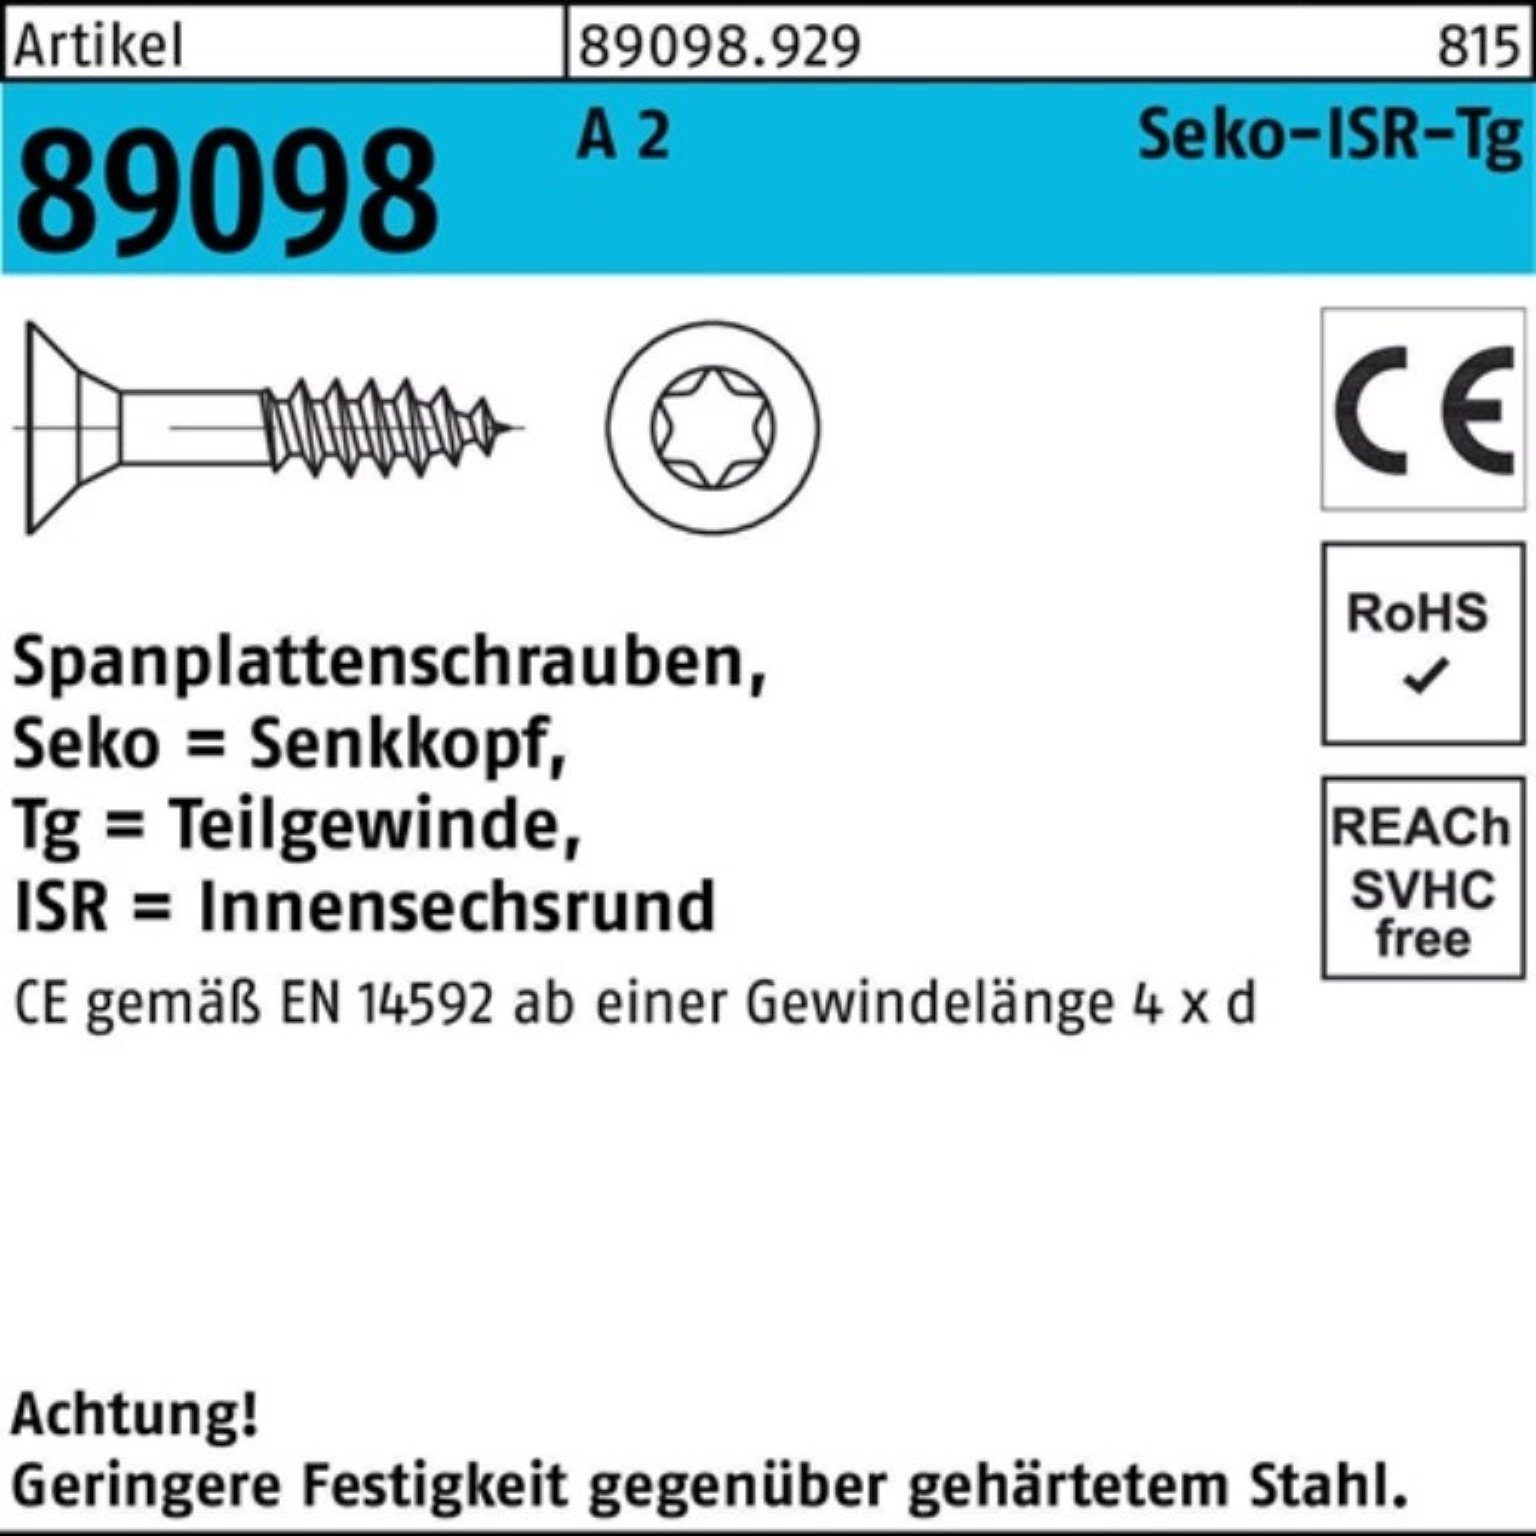 A 89098 Spanplattenschraube R 5x 1000er 2 1000 Spanplattenschraube TG Reyher Pack ISR SEKO 50-T25